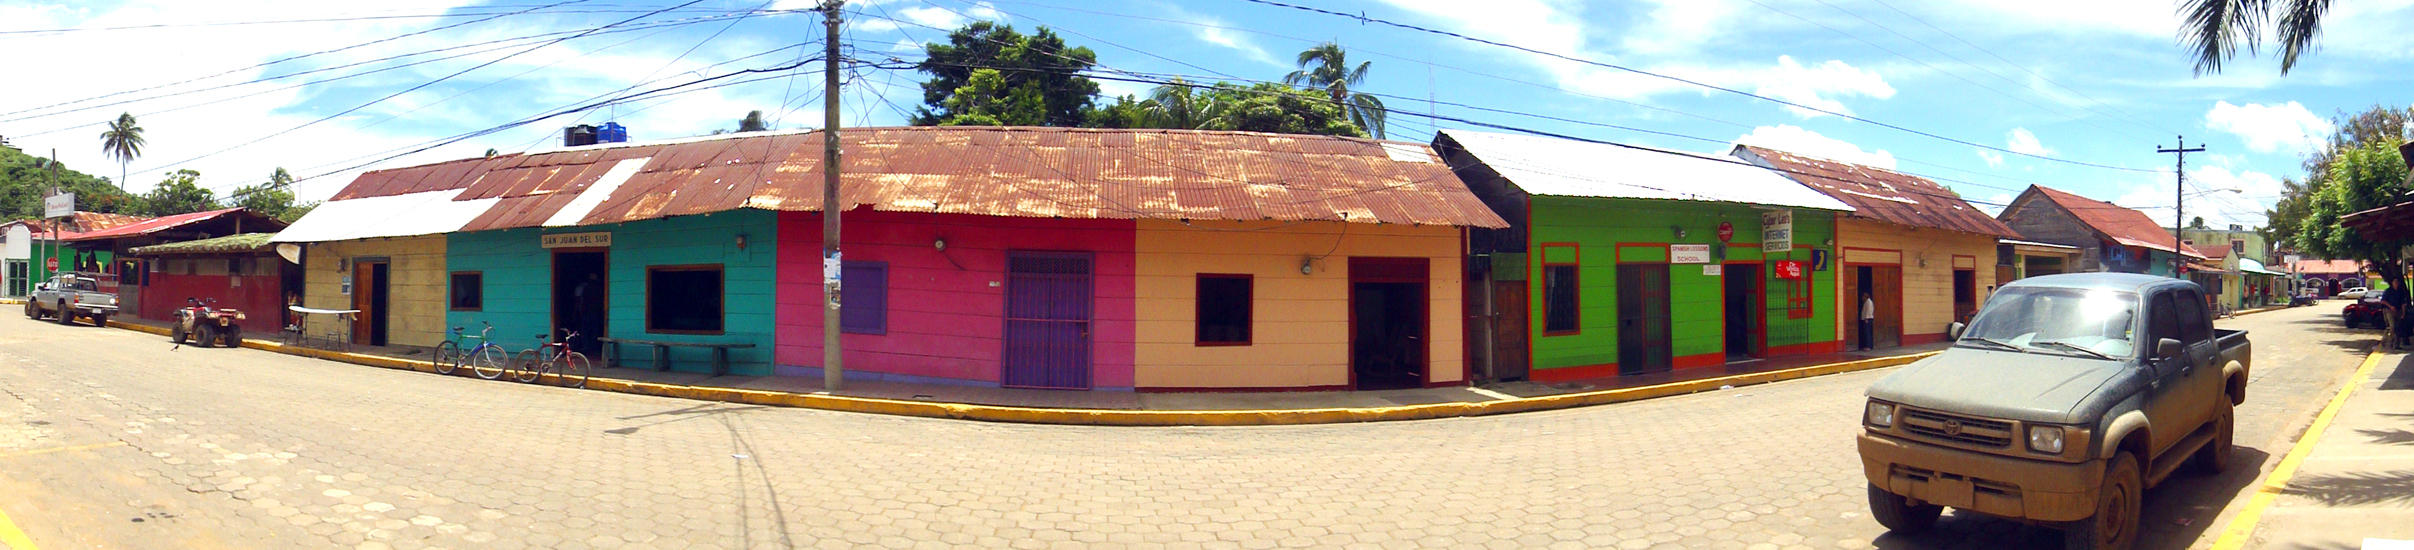 Coffee Street or Billiard Street in San Juan del Sur, Nicaragua